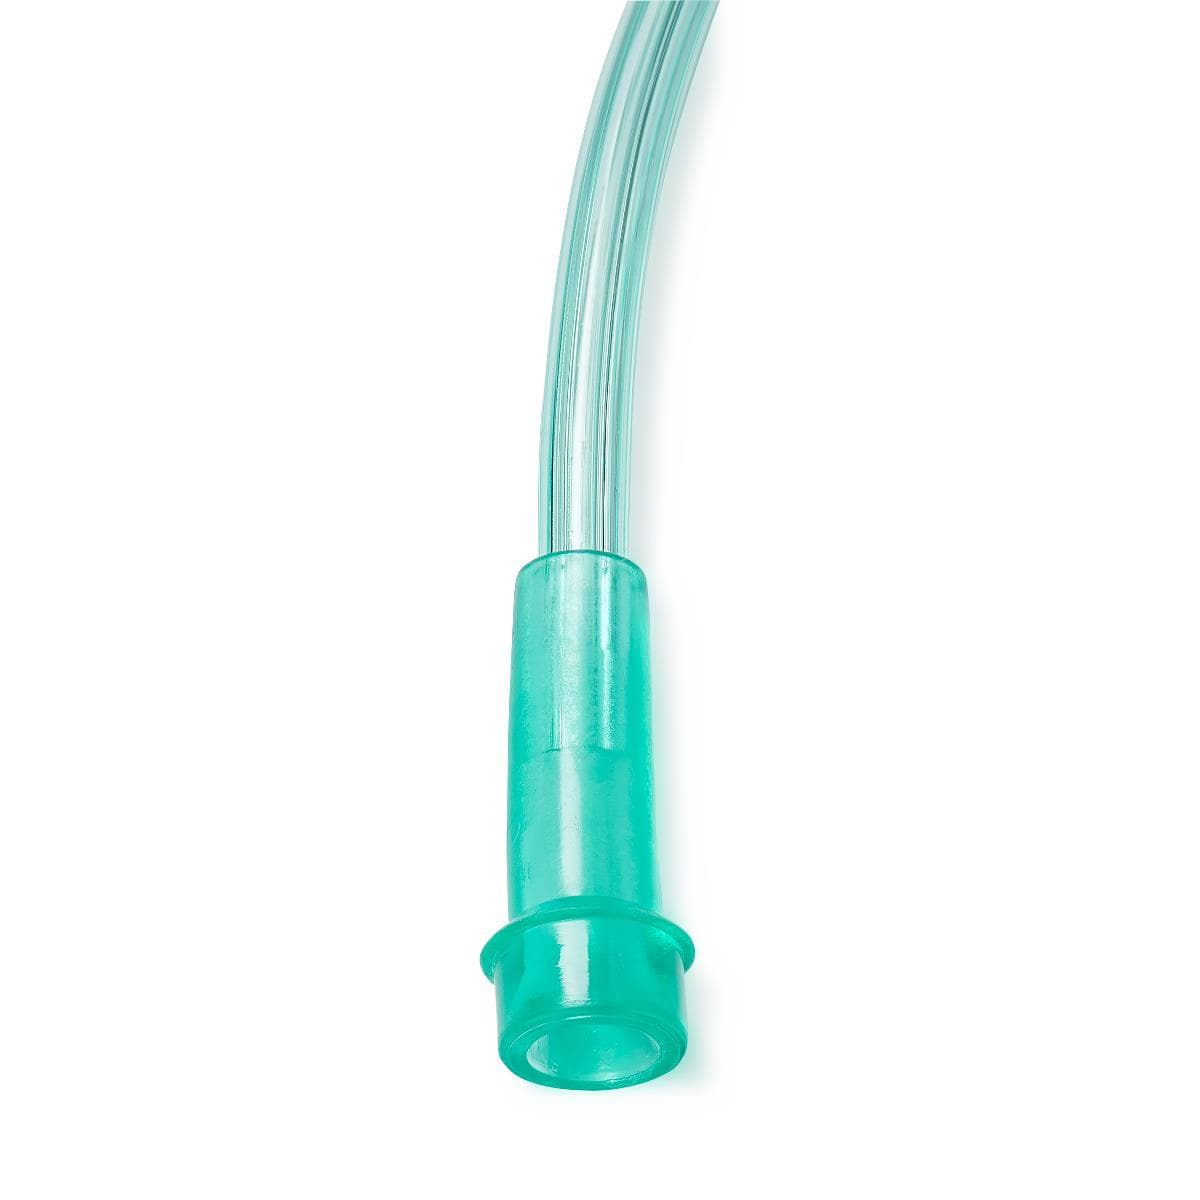 Medline Green Oxygen Tubing with Standard Connector - Crush Resistant - Senior.com Oxygen Tubing